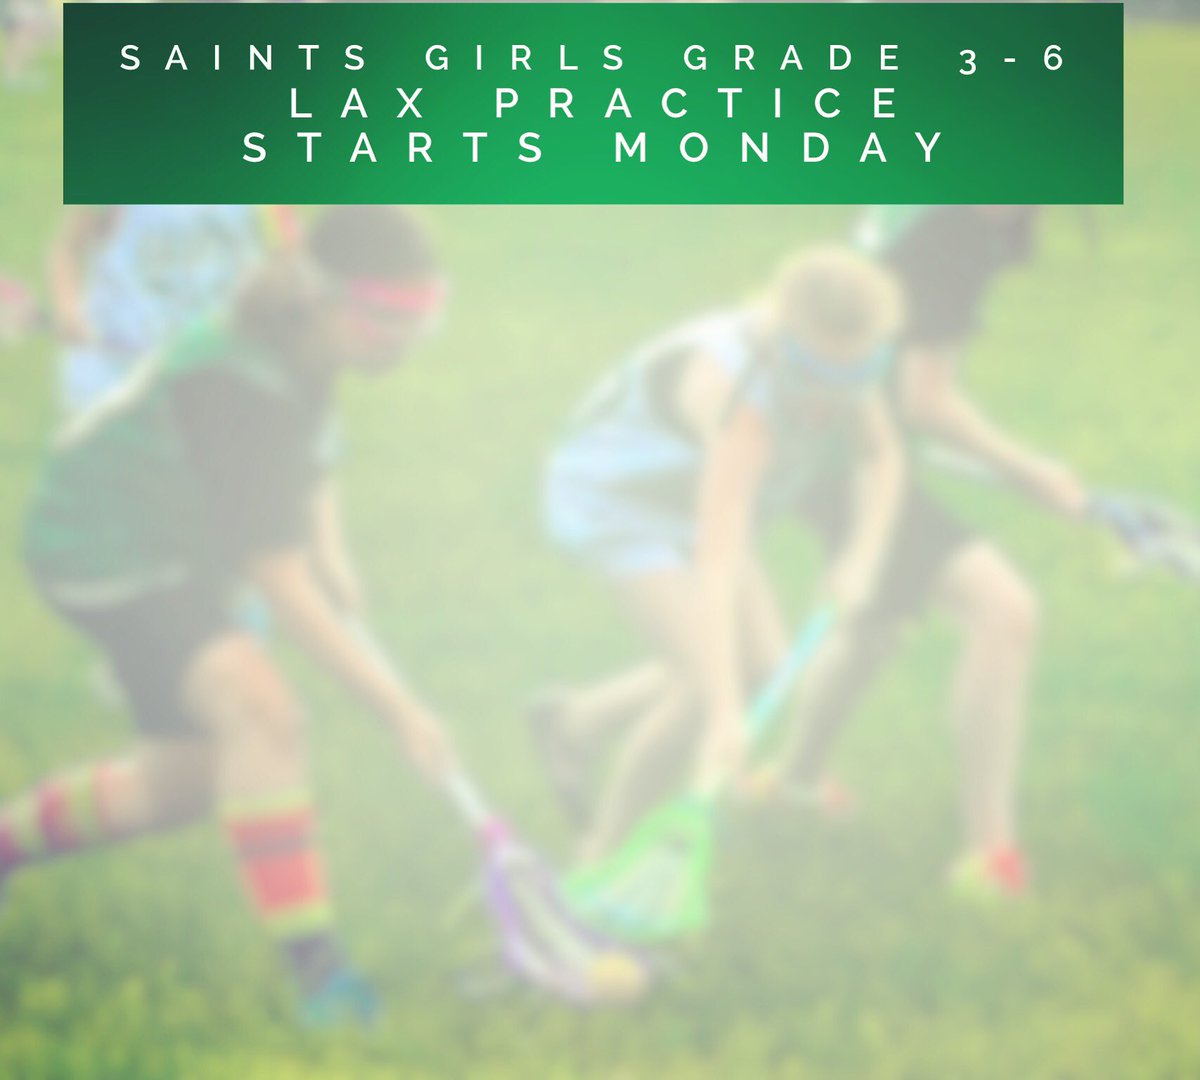 SAINTS Girls Lax
3rd-6th Grade 
practice schedule at The Dome 
1500 Airport Rd Binghamton
 
Monday 4/9 – 5:15pm-6:30pm
 
Wednesday 4/11 - 5:15pm-6:30pm
 
Friday 4/13 - 5:15pm-6:30pm
 
E-mail Coach Burtis with any ❓s
jburtis@vapc.us
#SAINTSLax #CatholicSchools #Lax #LaxLife